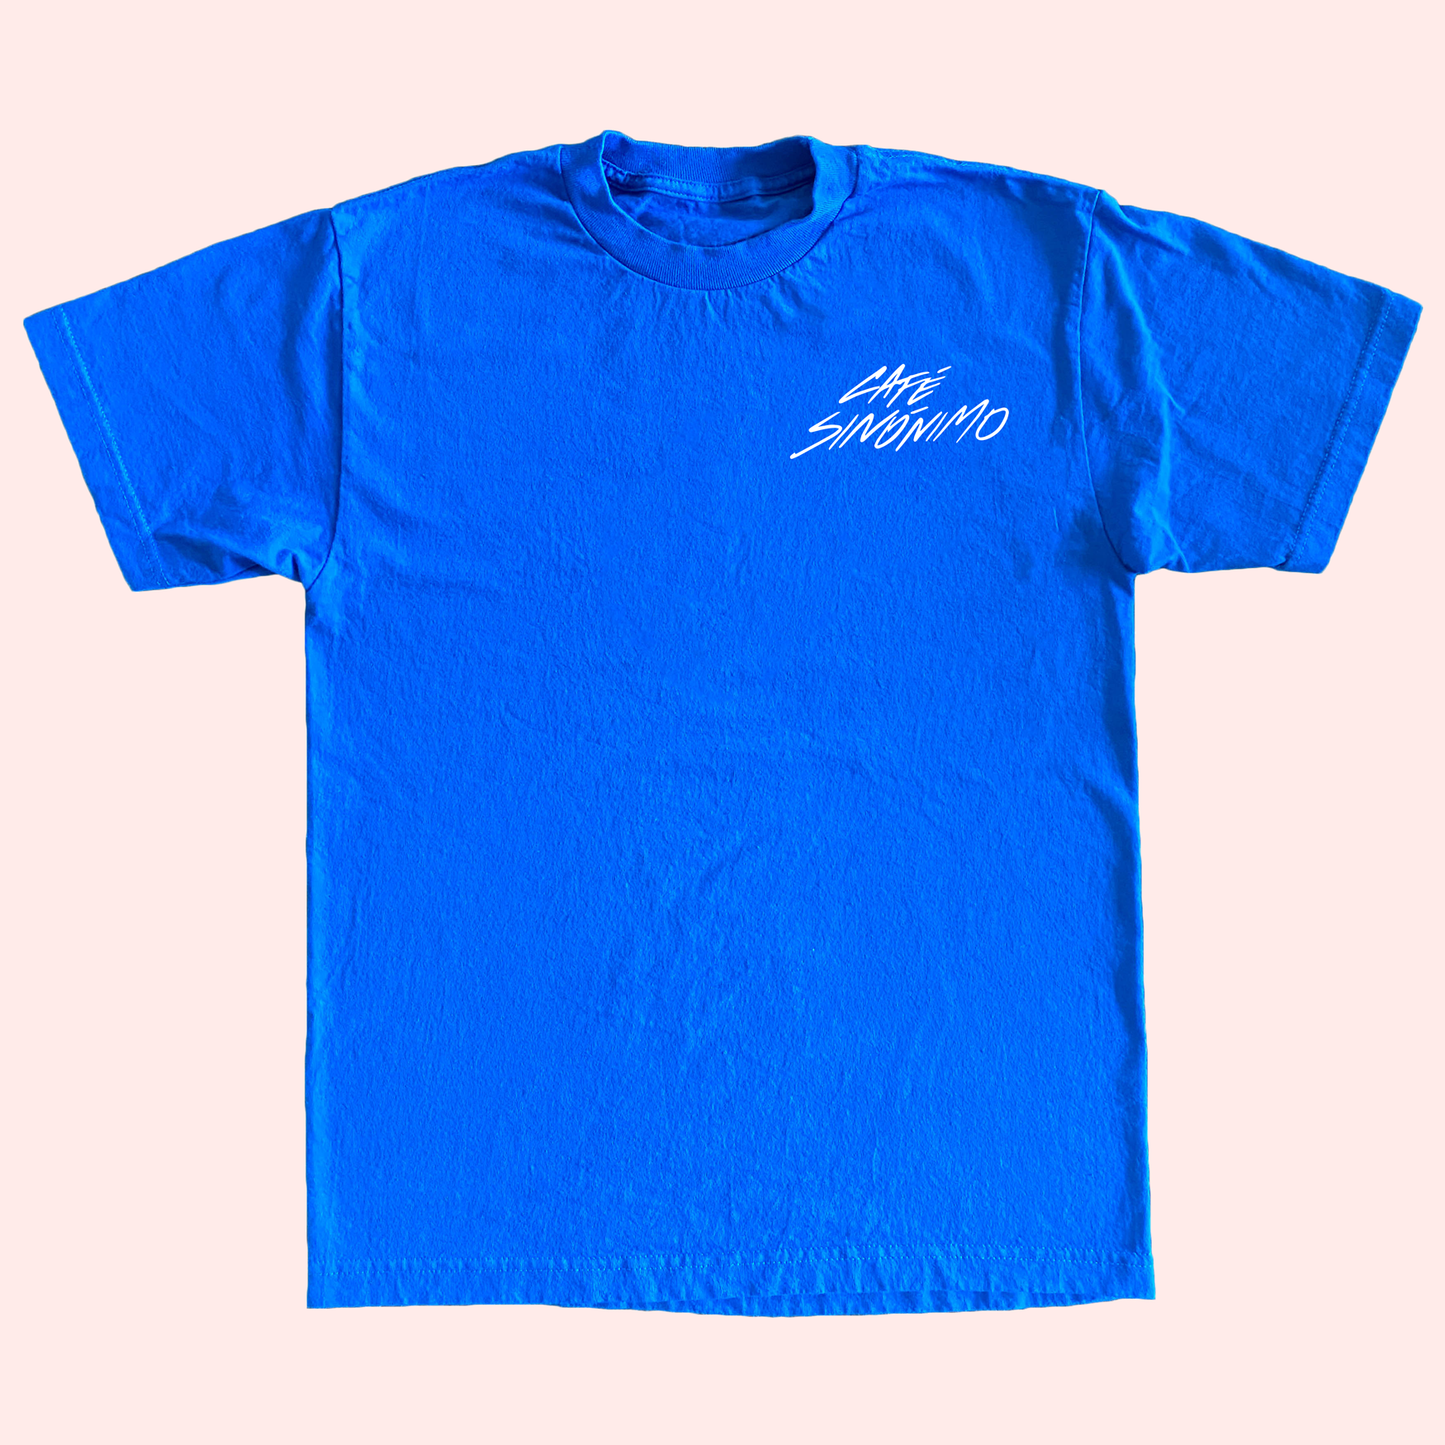 "Siempre al cien" Blue T-Shirt